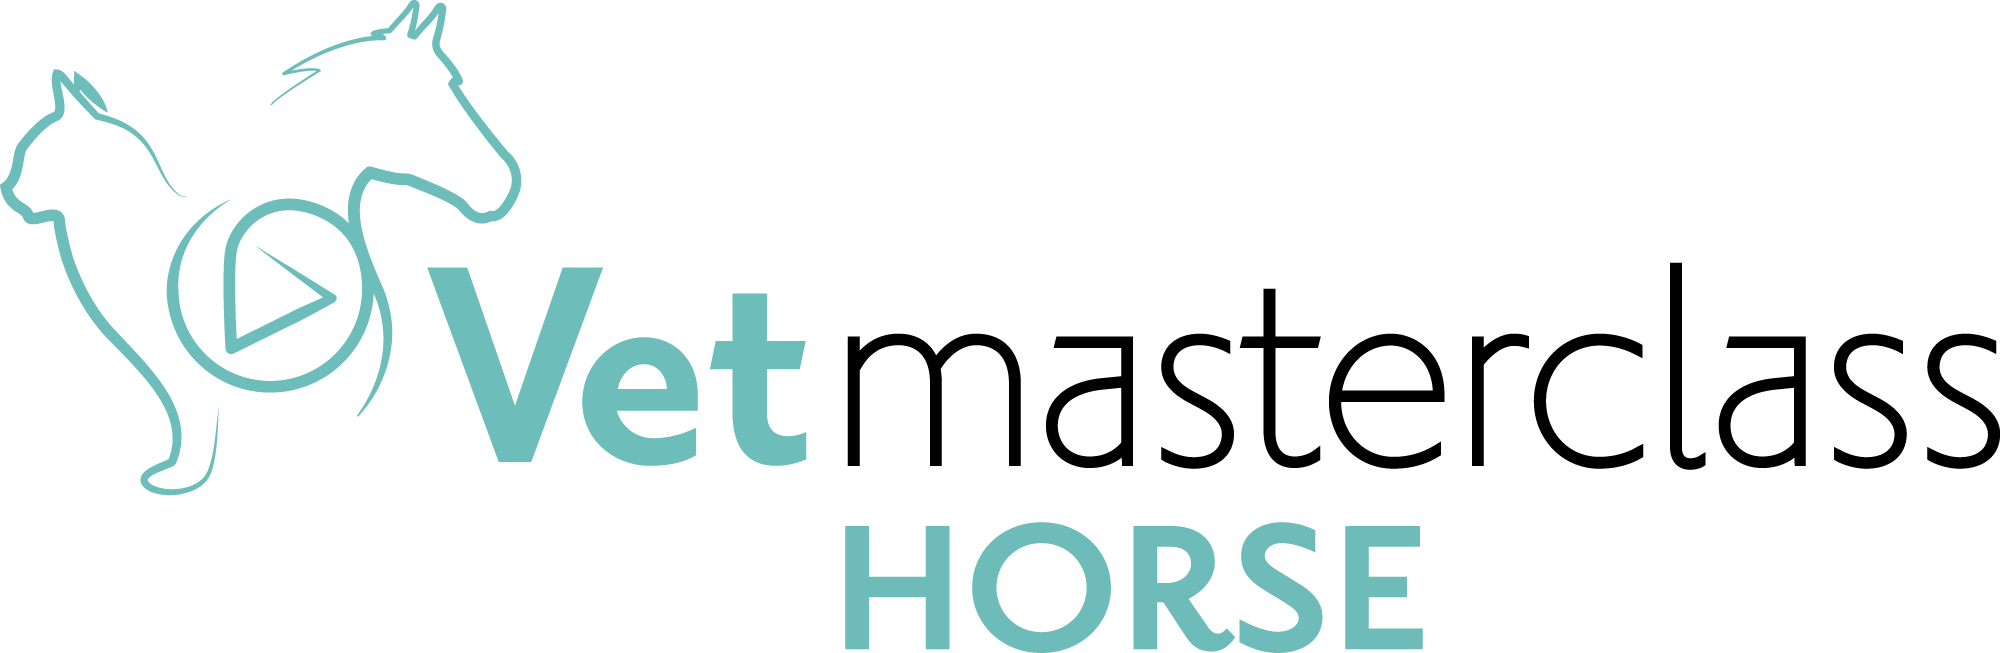 vet master class horse